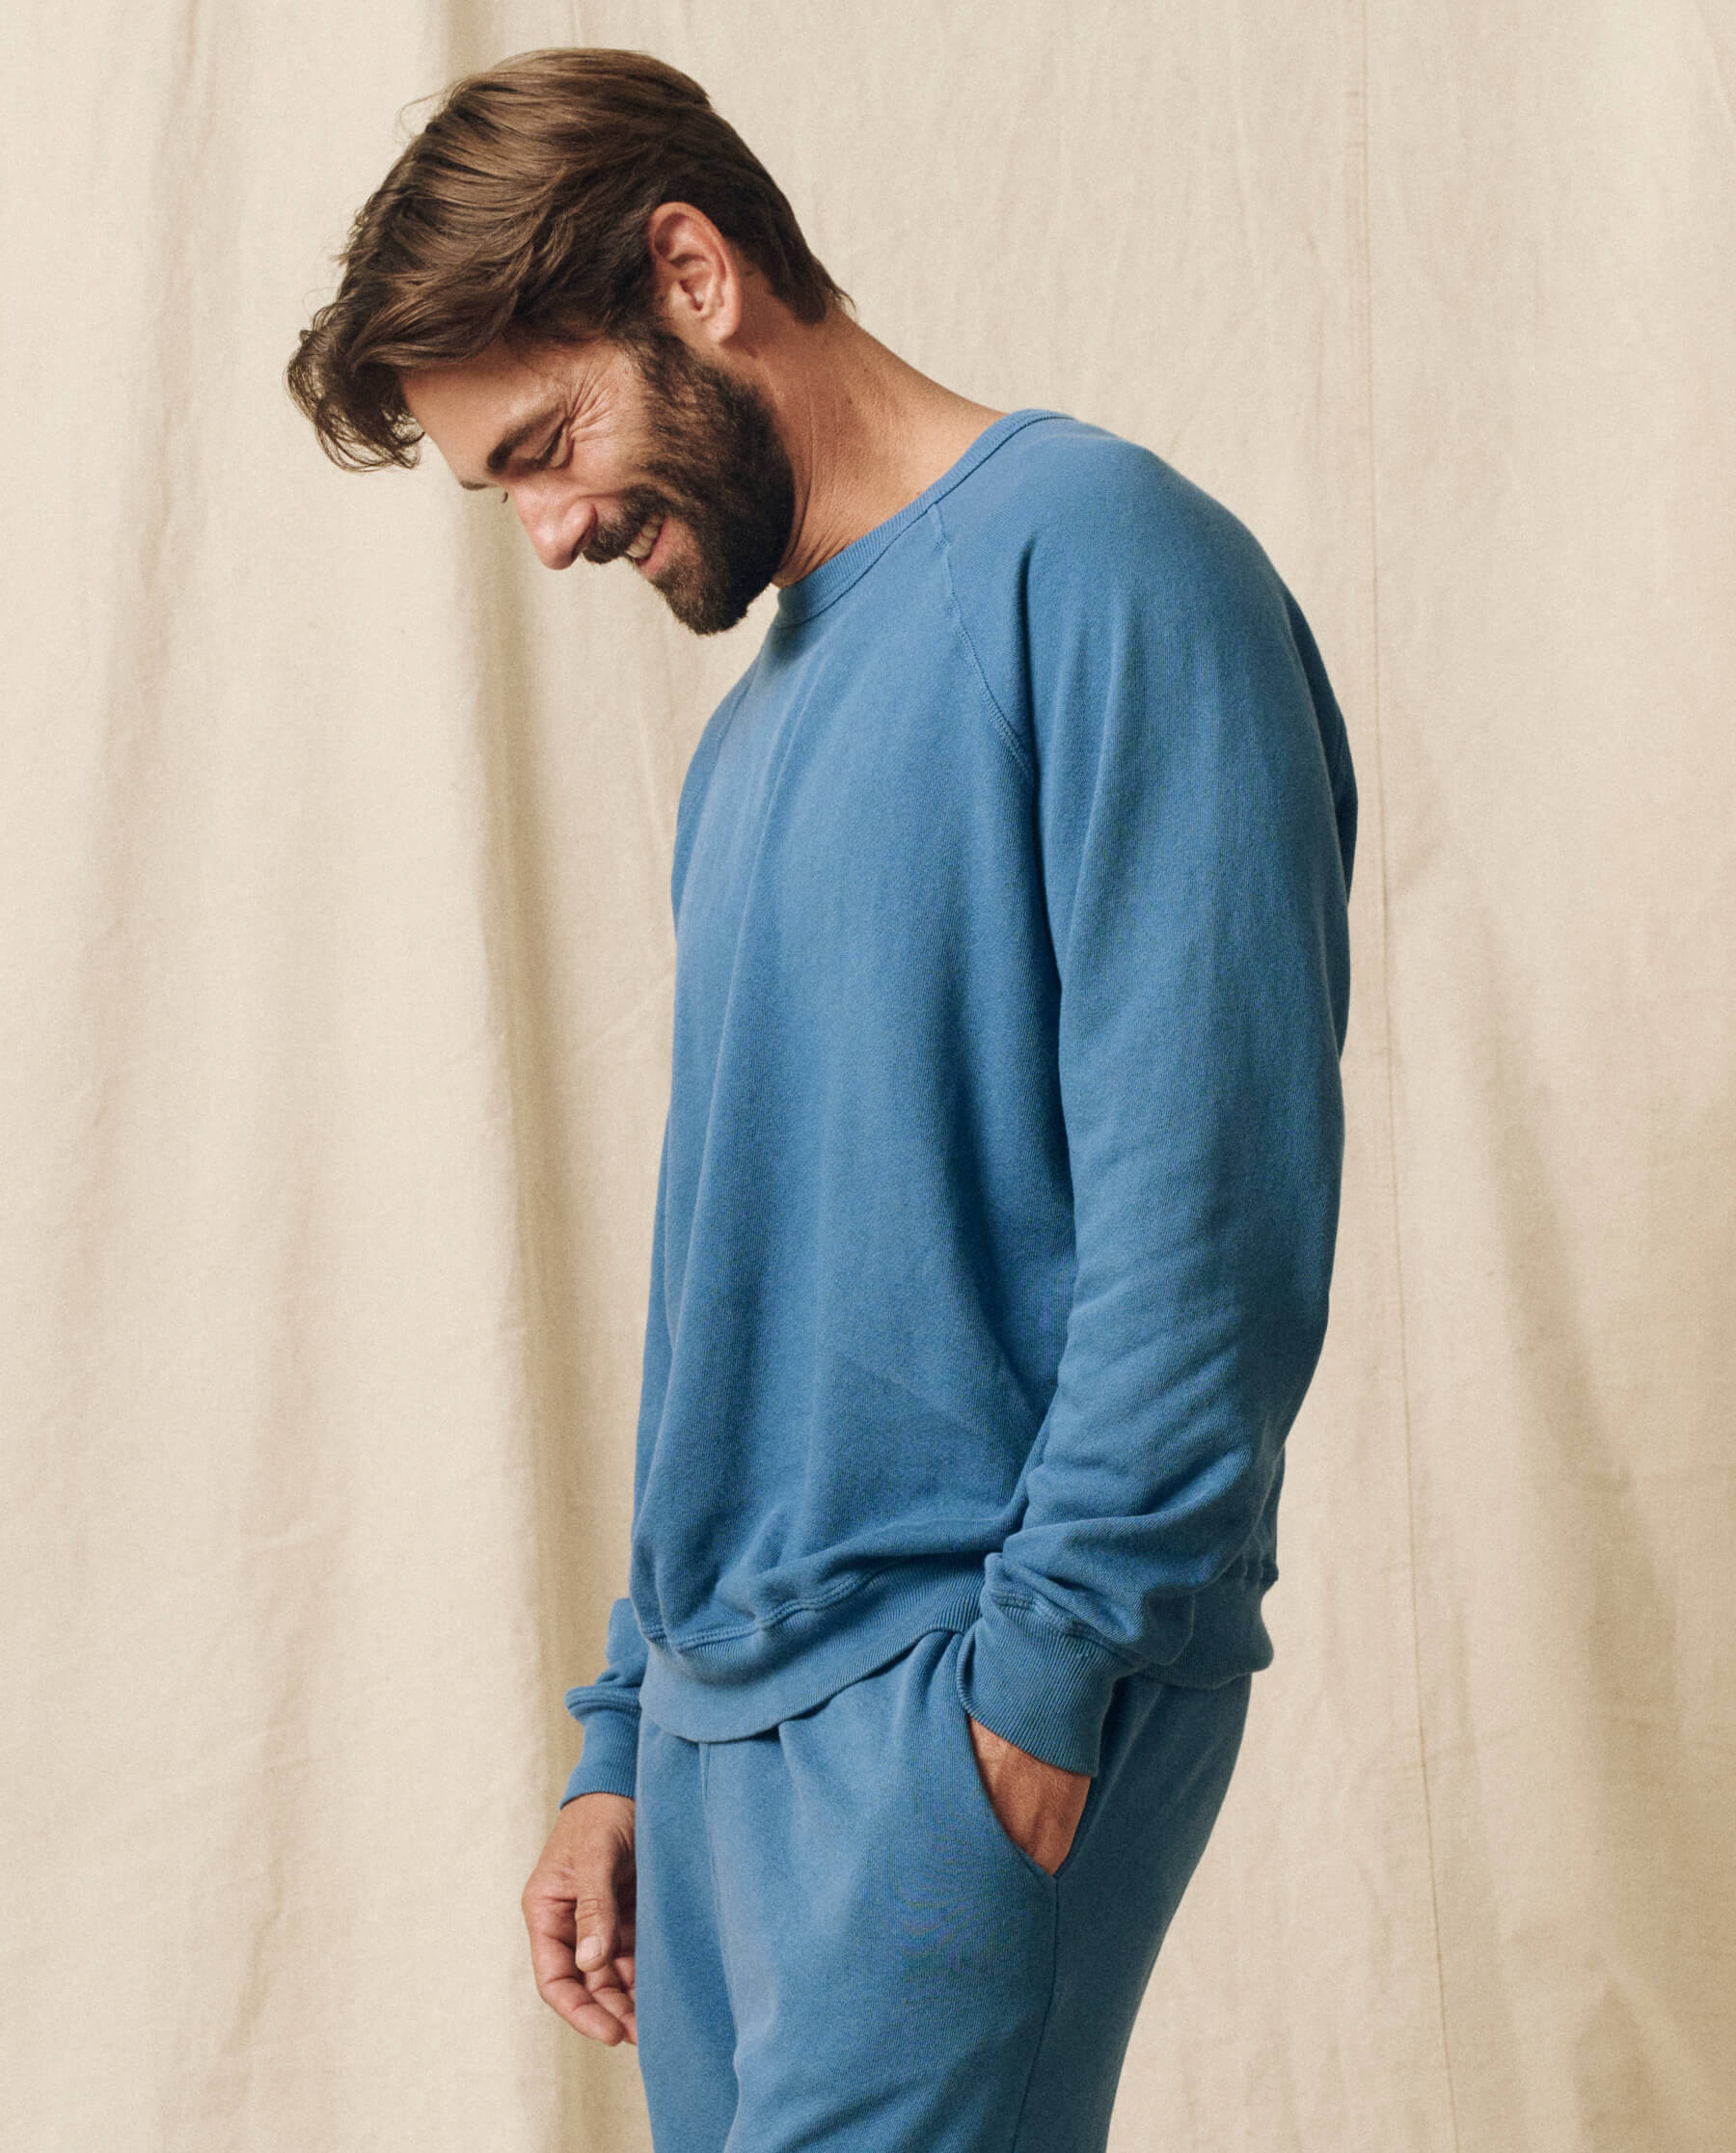 The Men's College Sweatshirt. Solid -- Glacier Blue SWEATSHIRTS THE GREAT. HOL 23 MEN